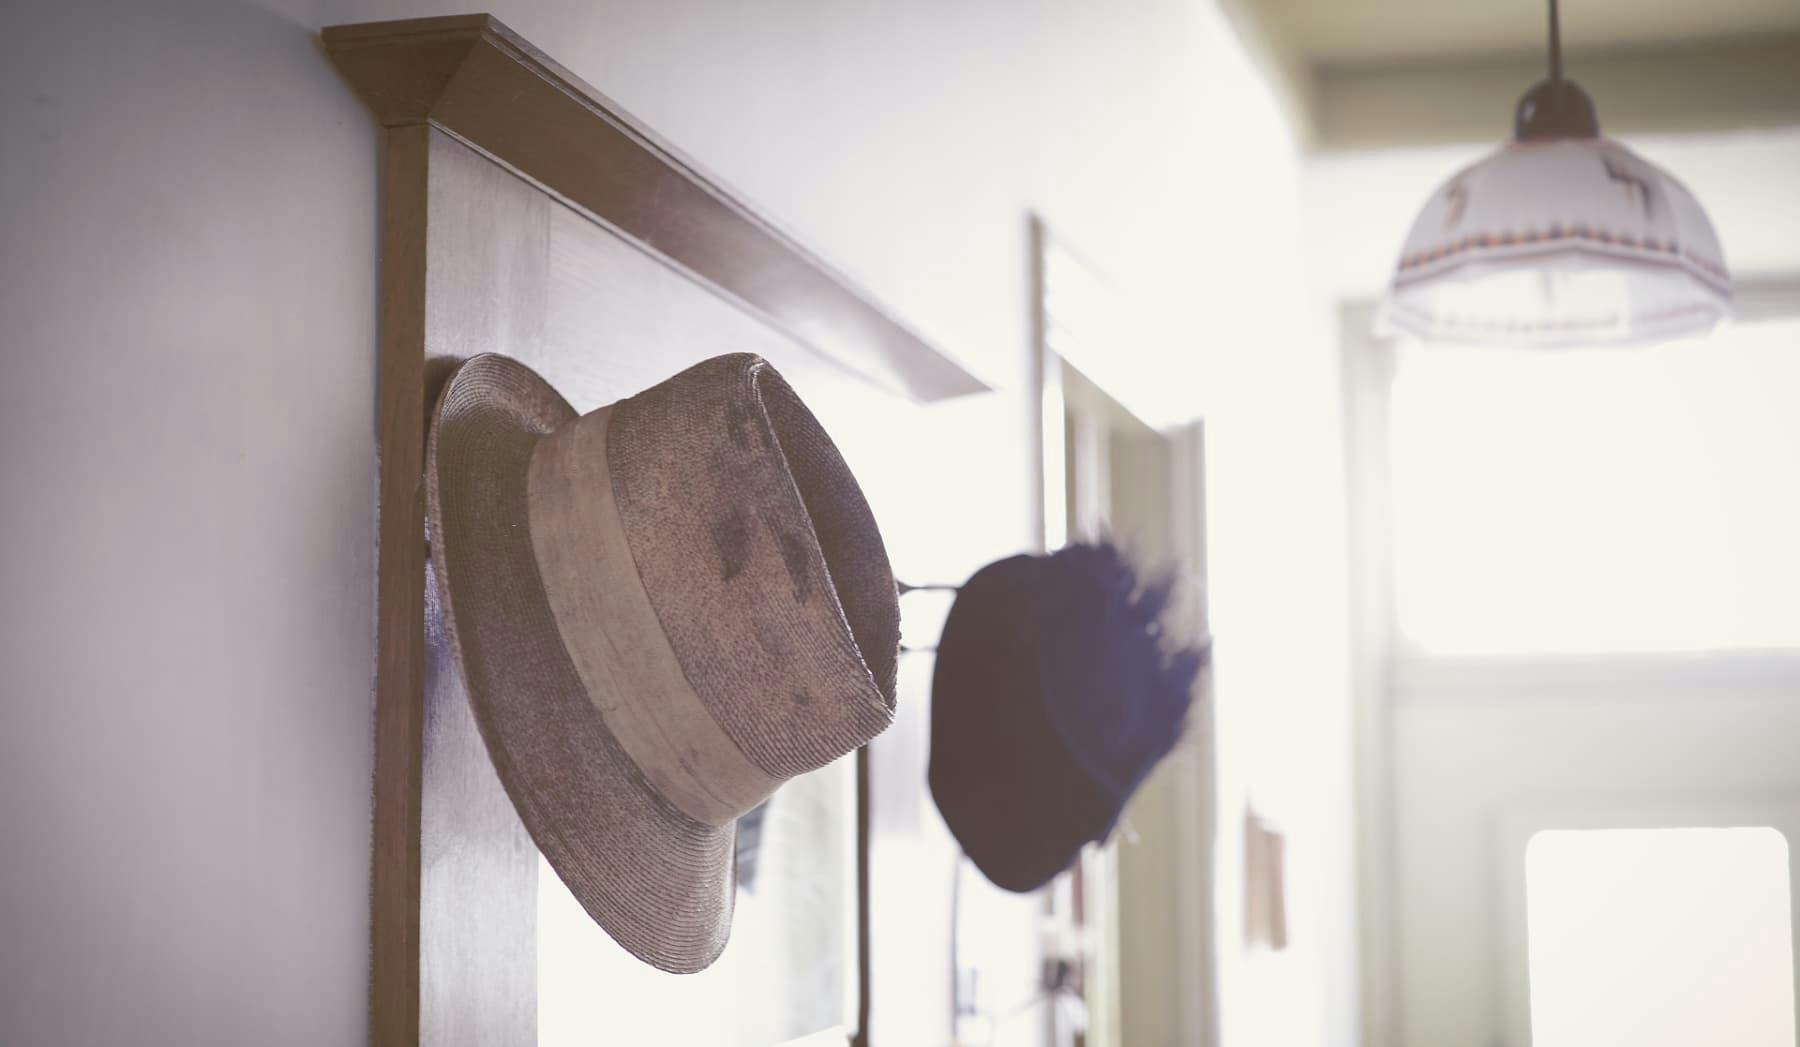 hats hung entrance